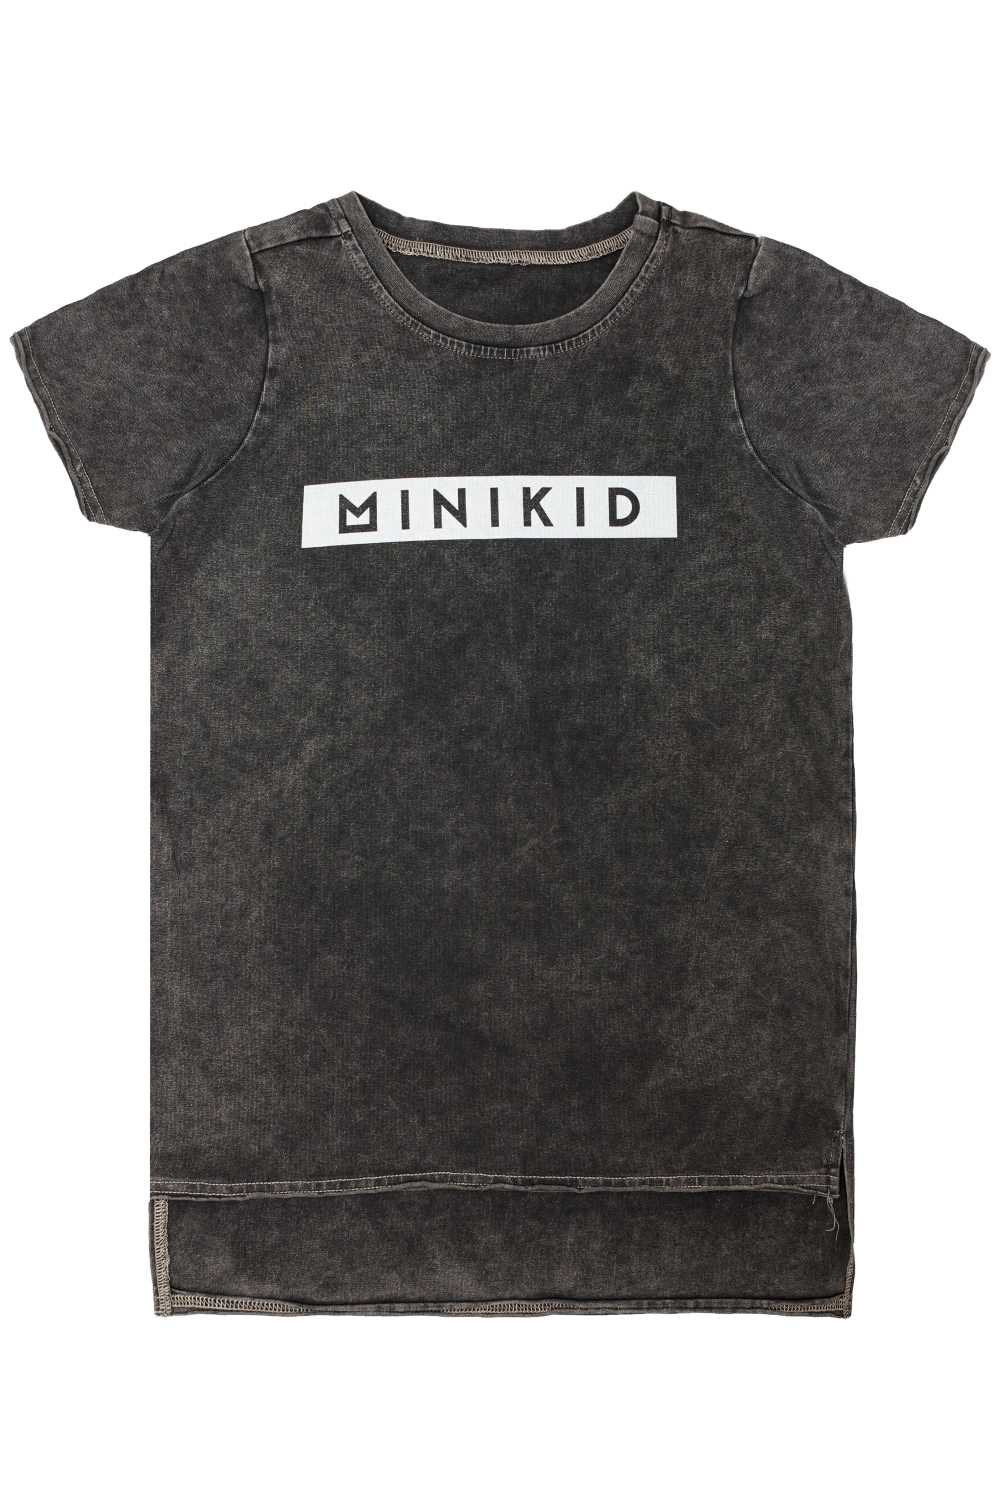 Minikid Unisex's T-shirt 007